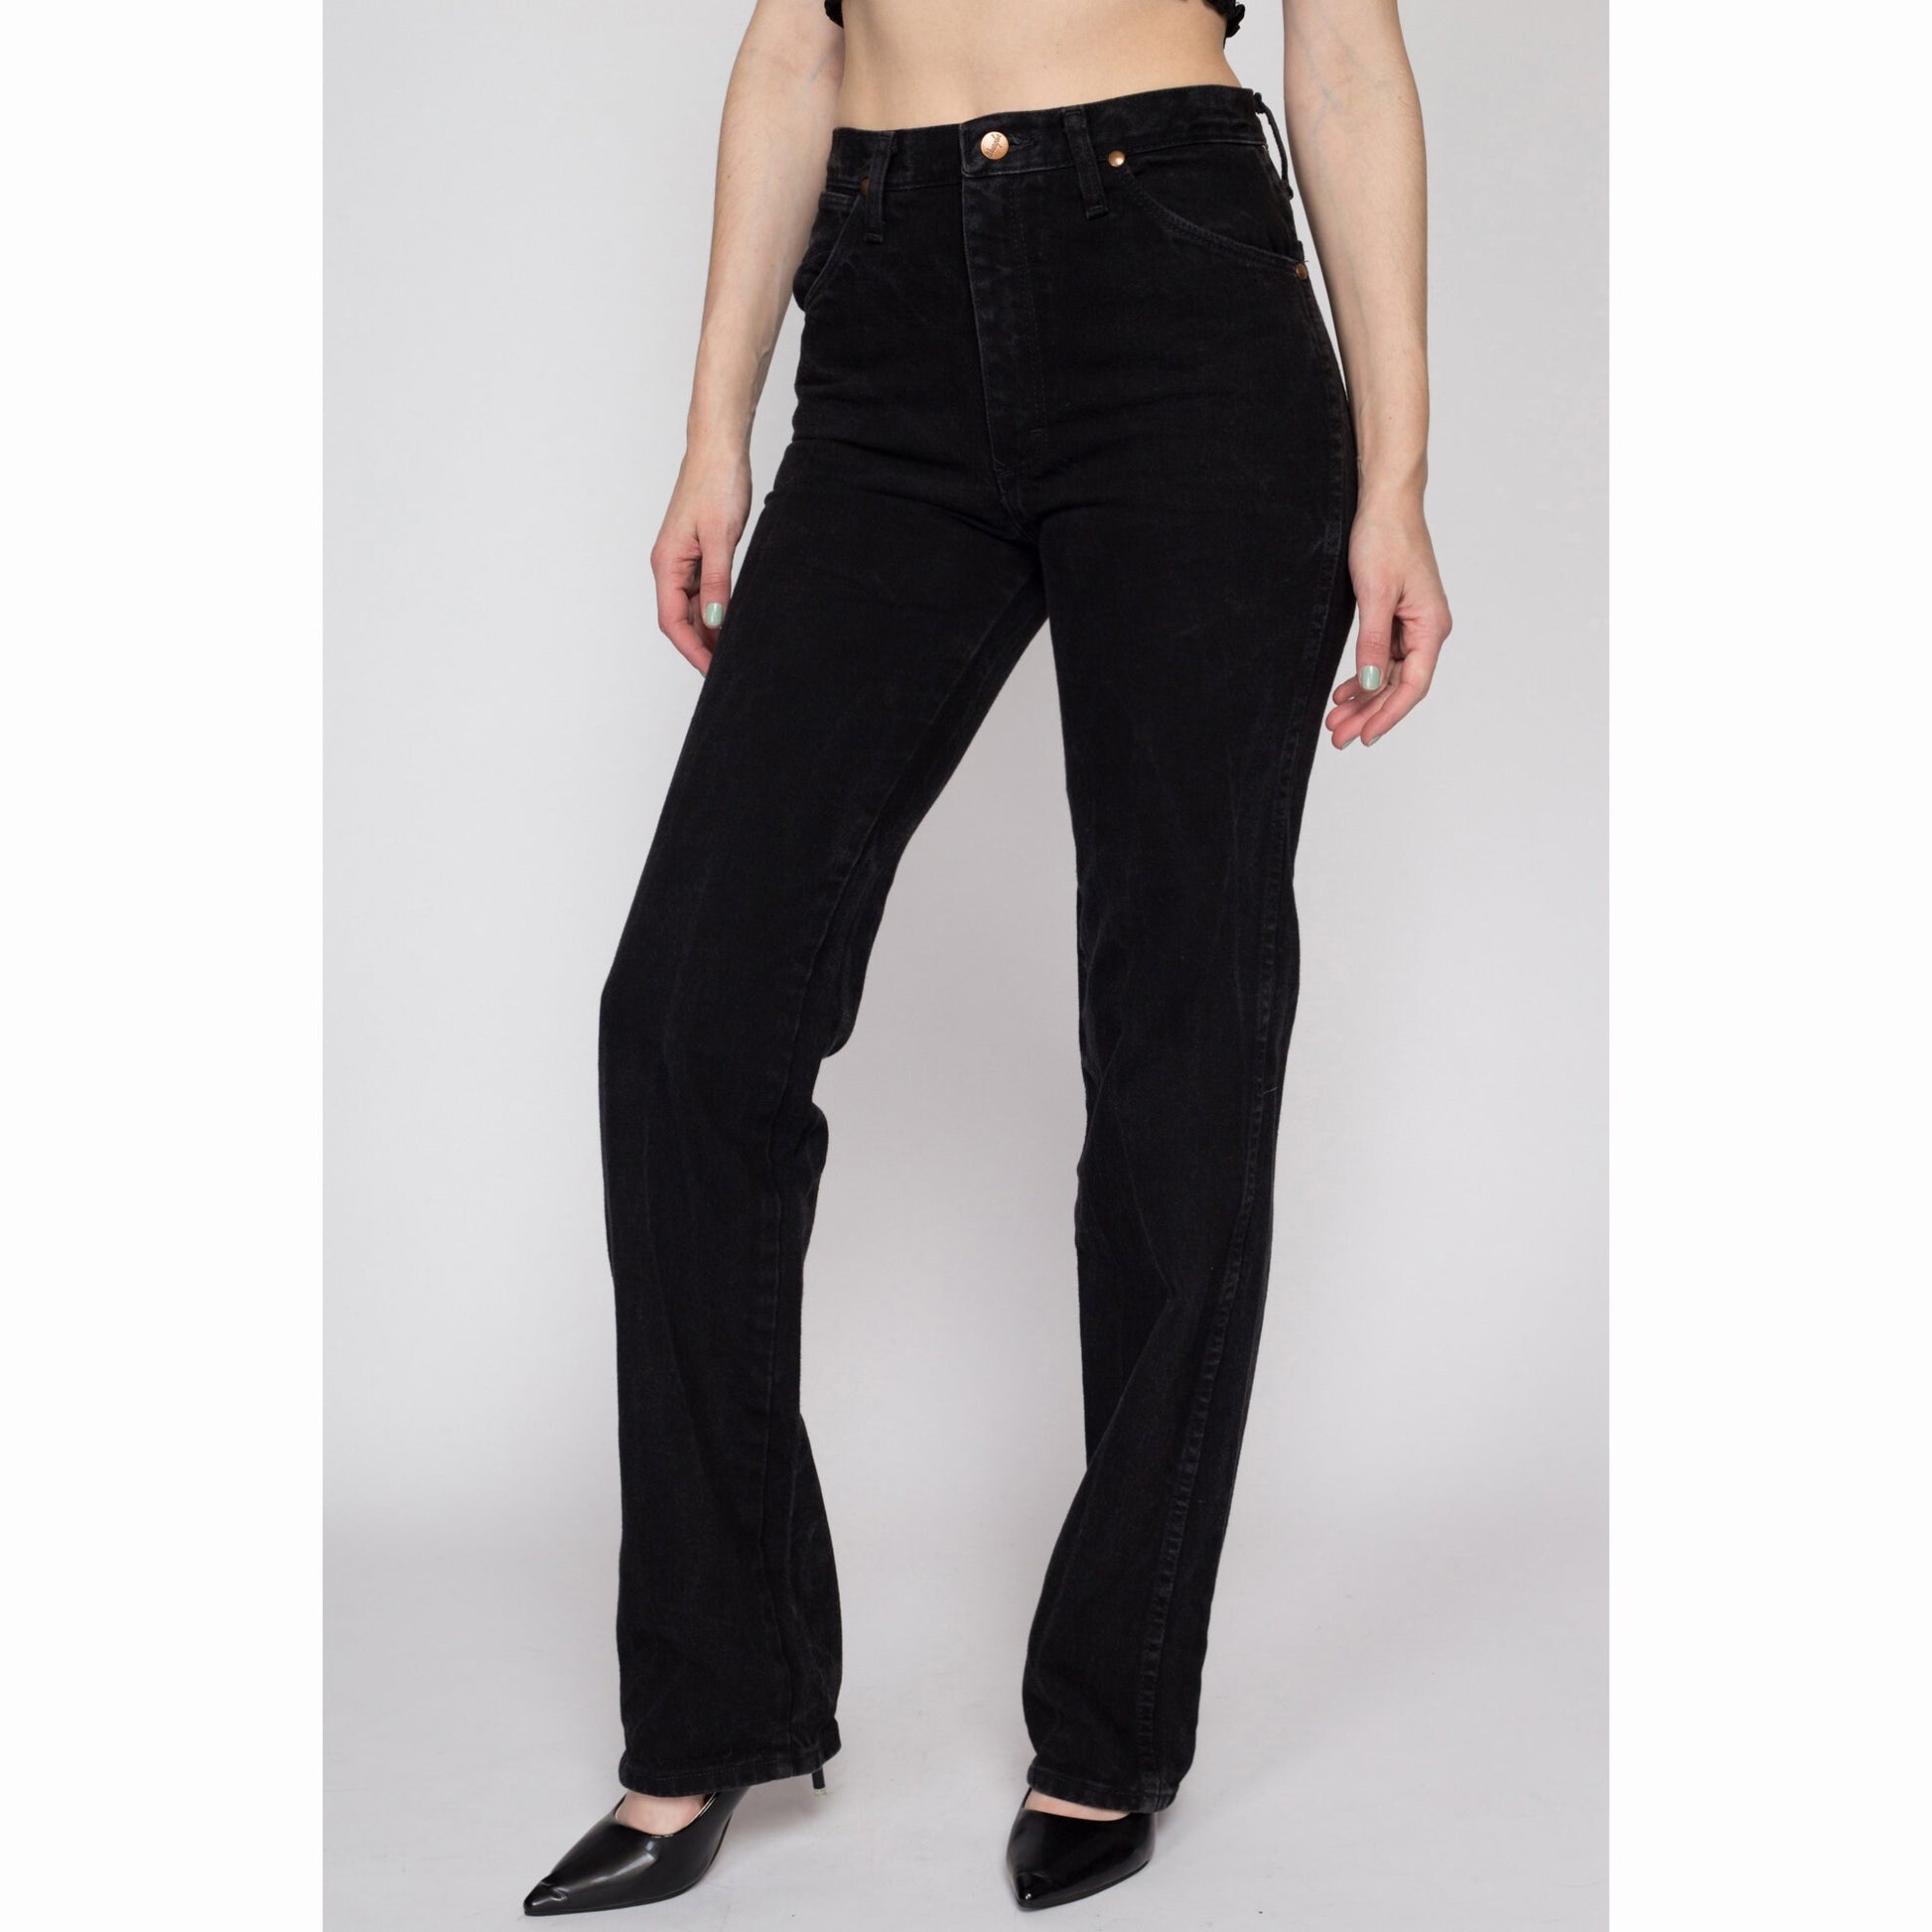 90s Black High Waisted Jeans - Medium, 29 – Flying Apple Vintage